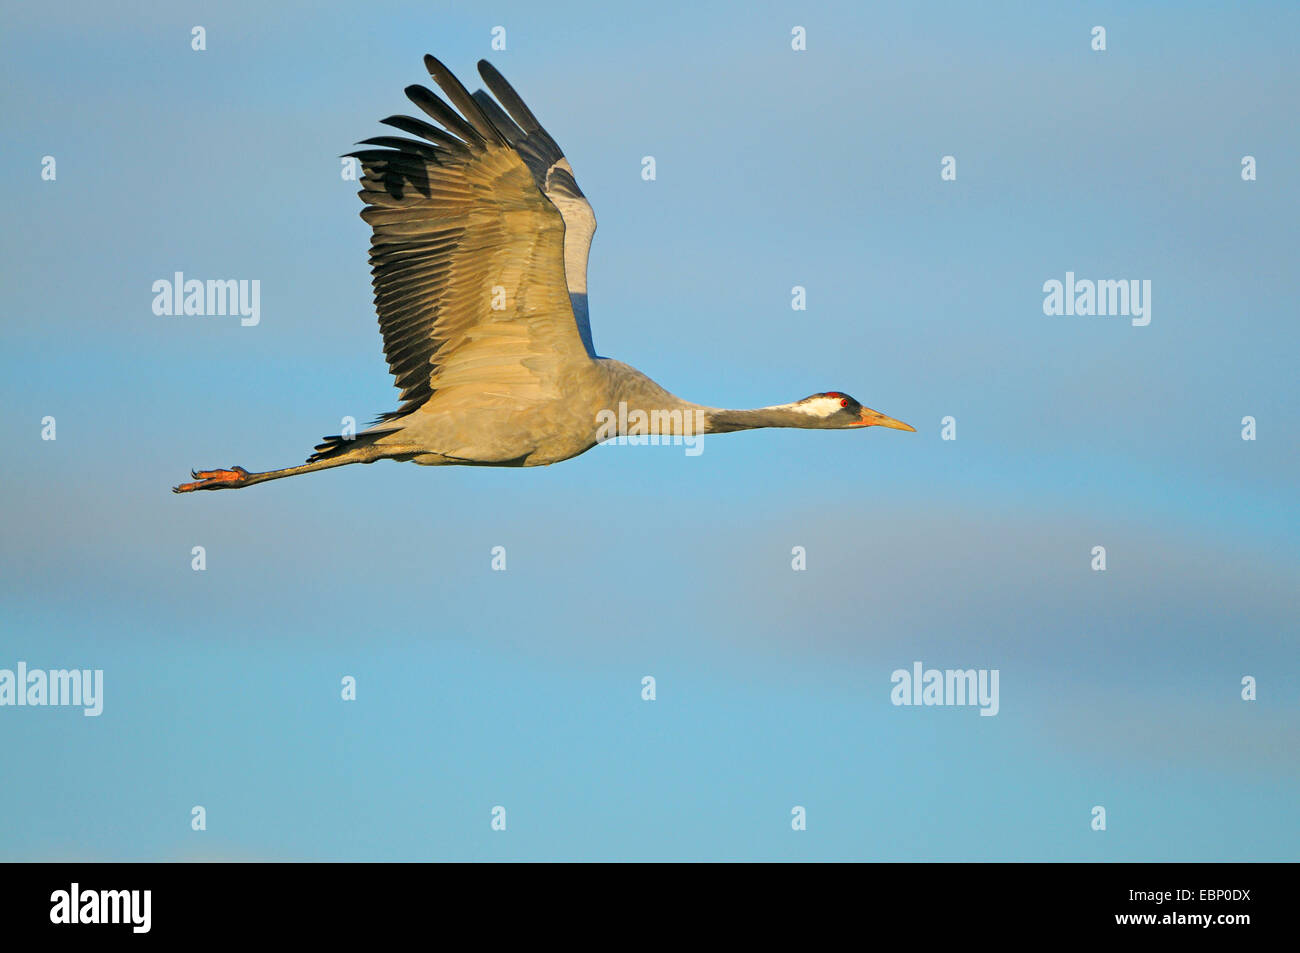 Common crane, Eurasian Crane (Grus grus), adult in flight in morning light, Germany, Mecklenburg-Western Pomerania, Western Pomerania Lagoon Area National Park Stock Photo